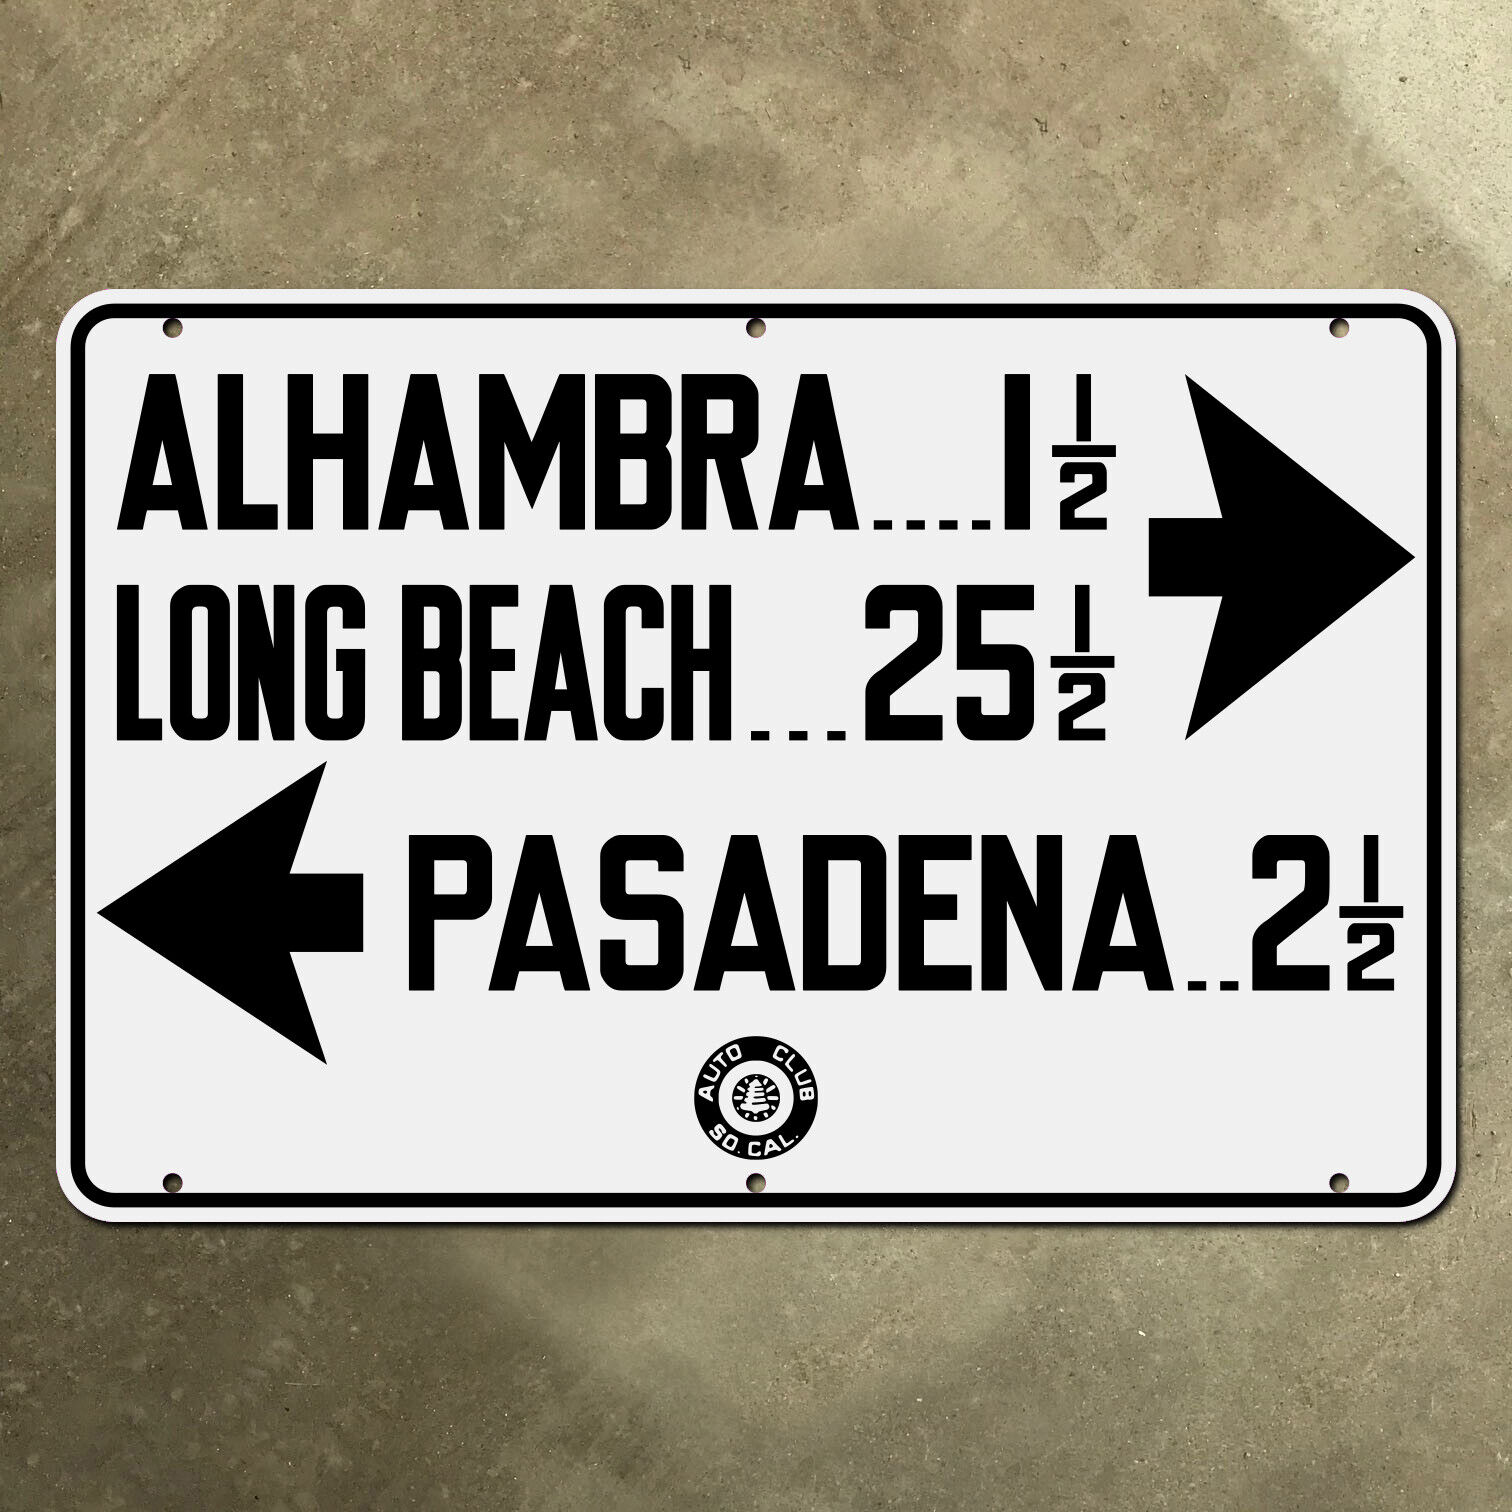 ACSC Alhambra Long Beach Pasadena highway road guide sign 1935 California 21x14